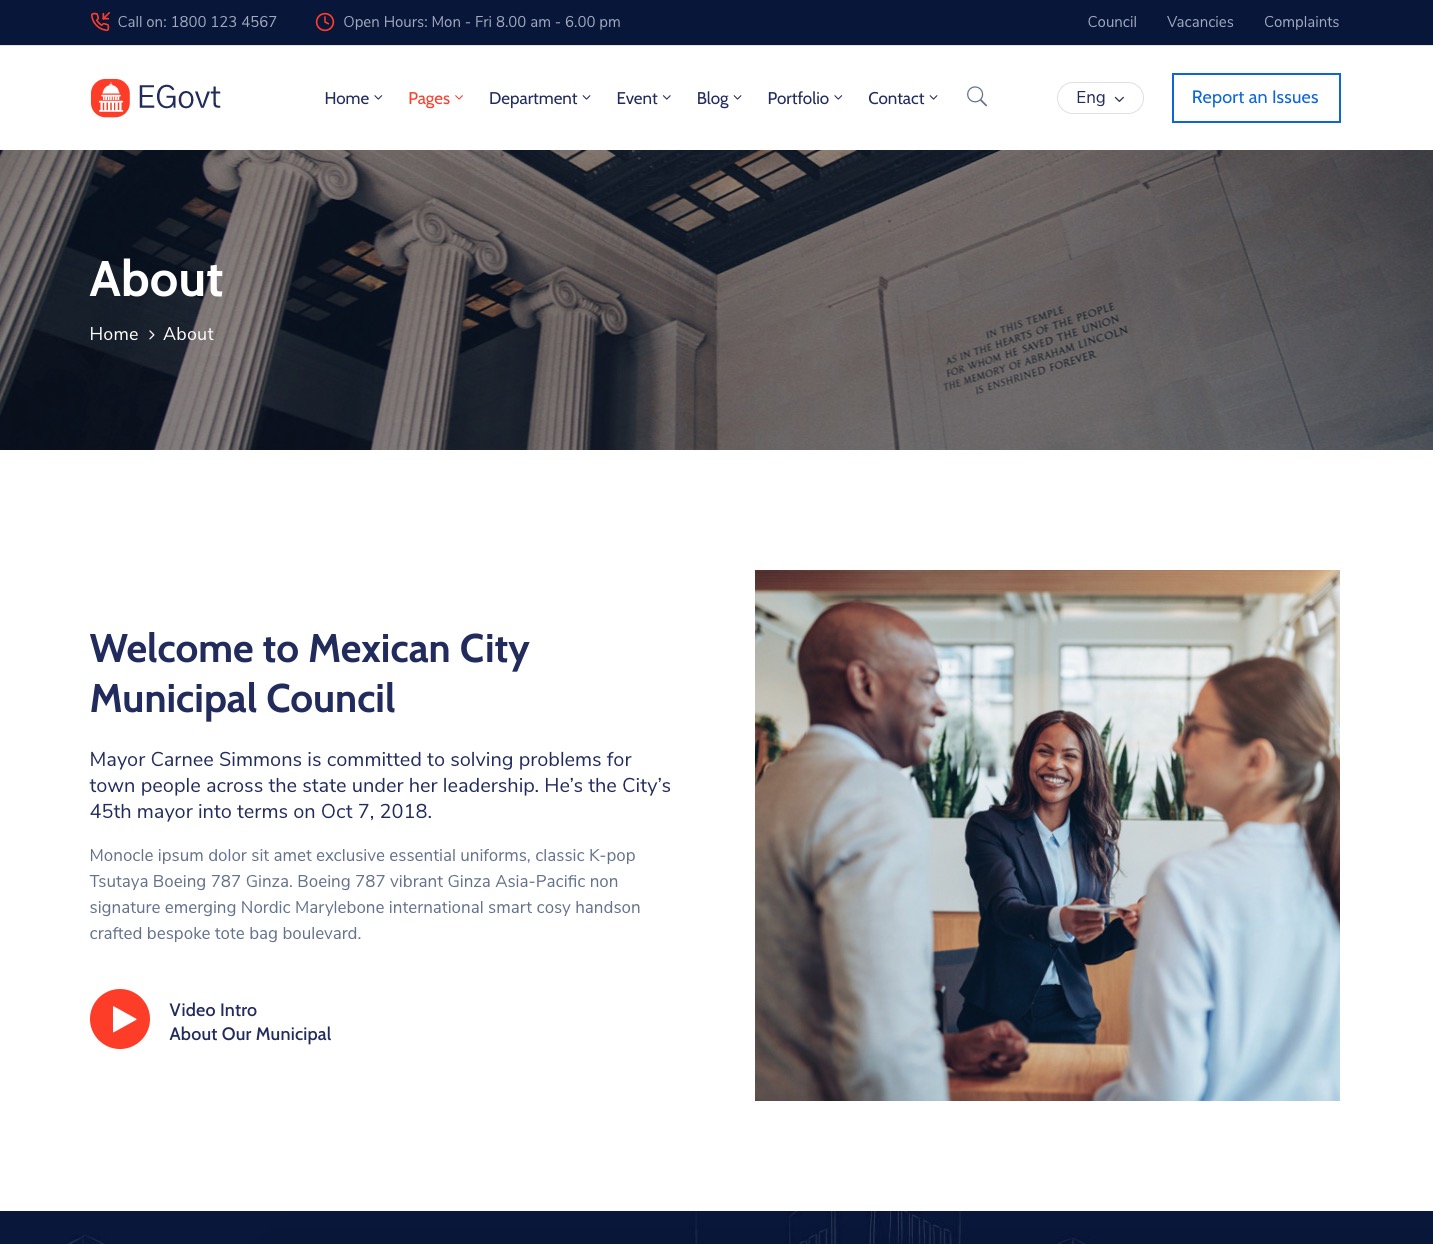 EGovt – City Government WordPress Theme